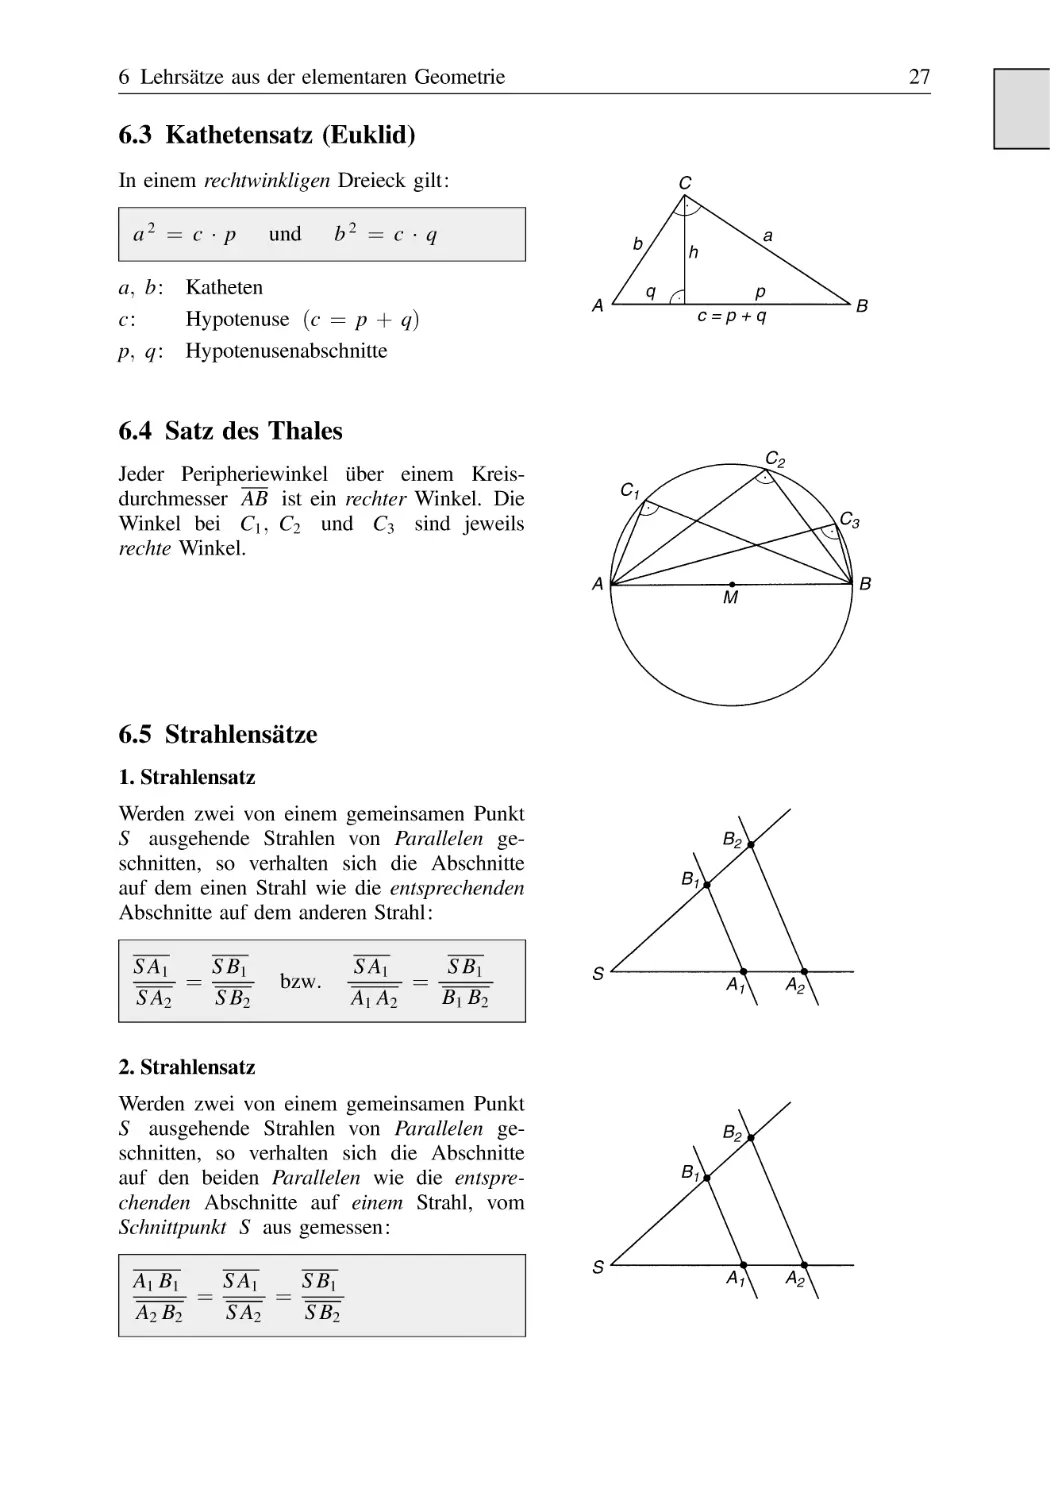 6.3 Kathetensatz (Euklid)
6.4 Satz des Thales
6.5 Strahlensätze